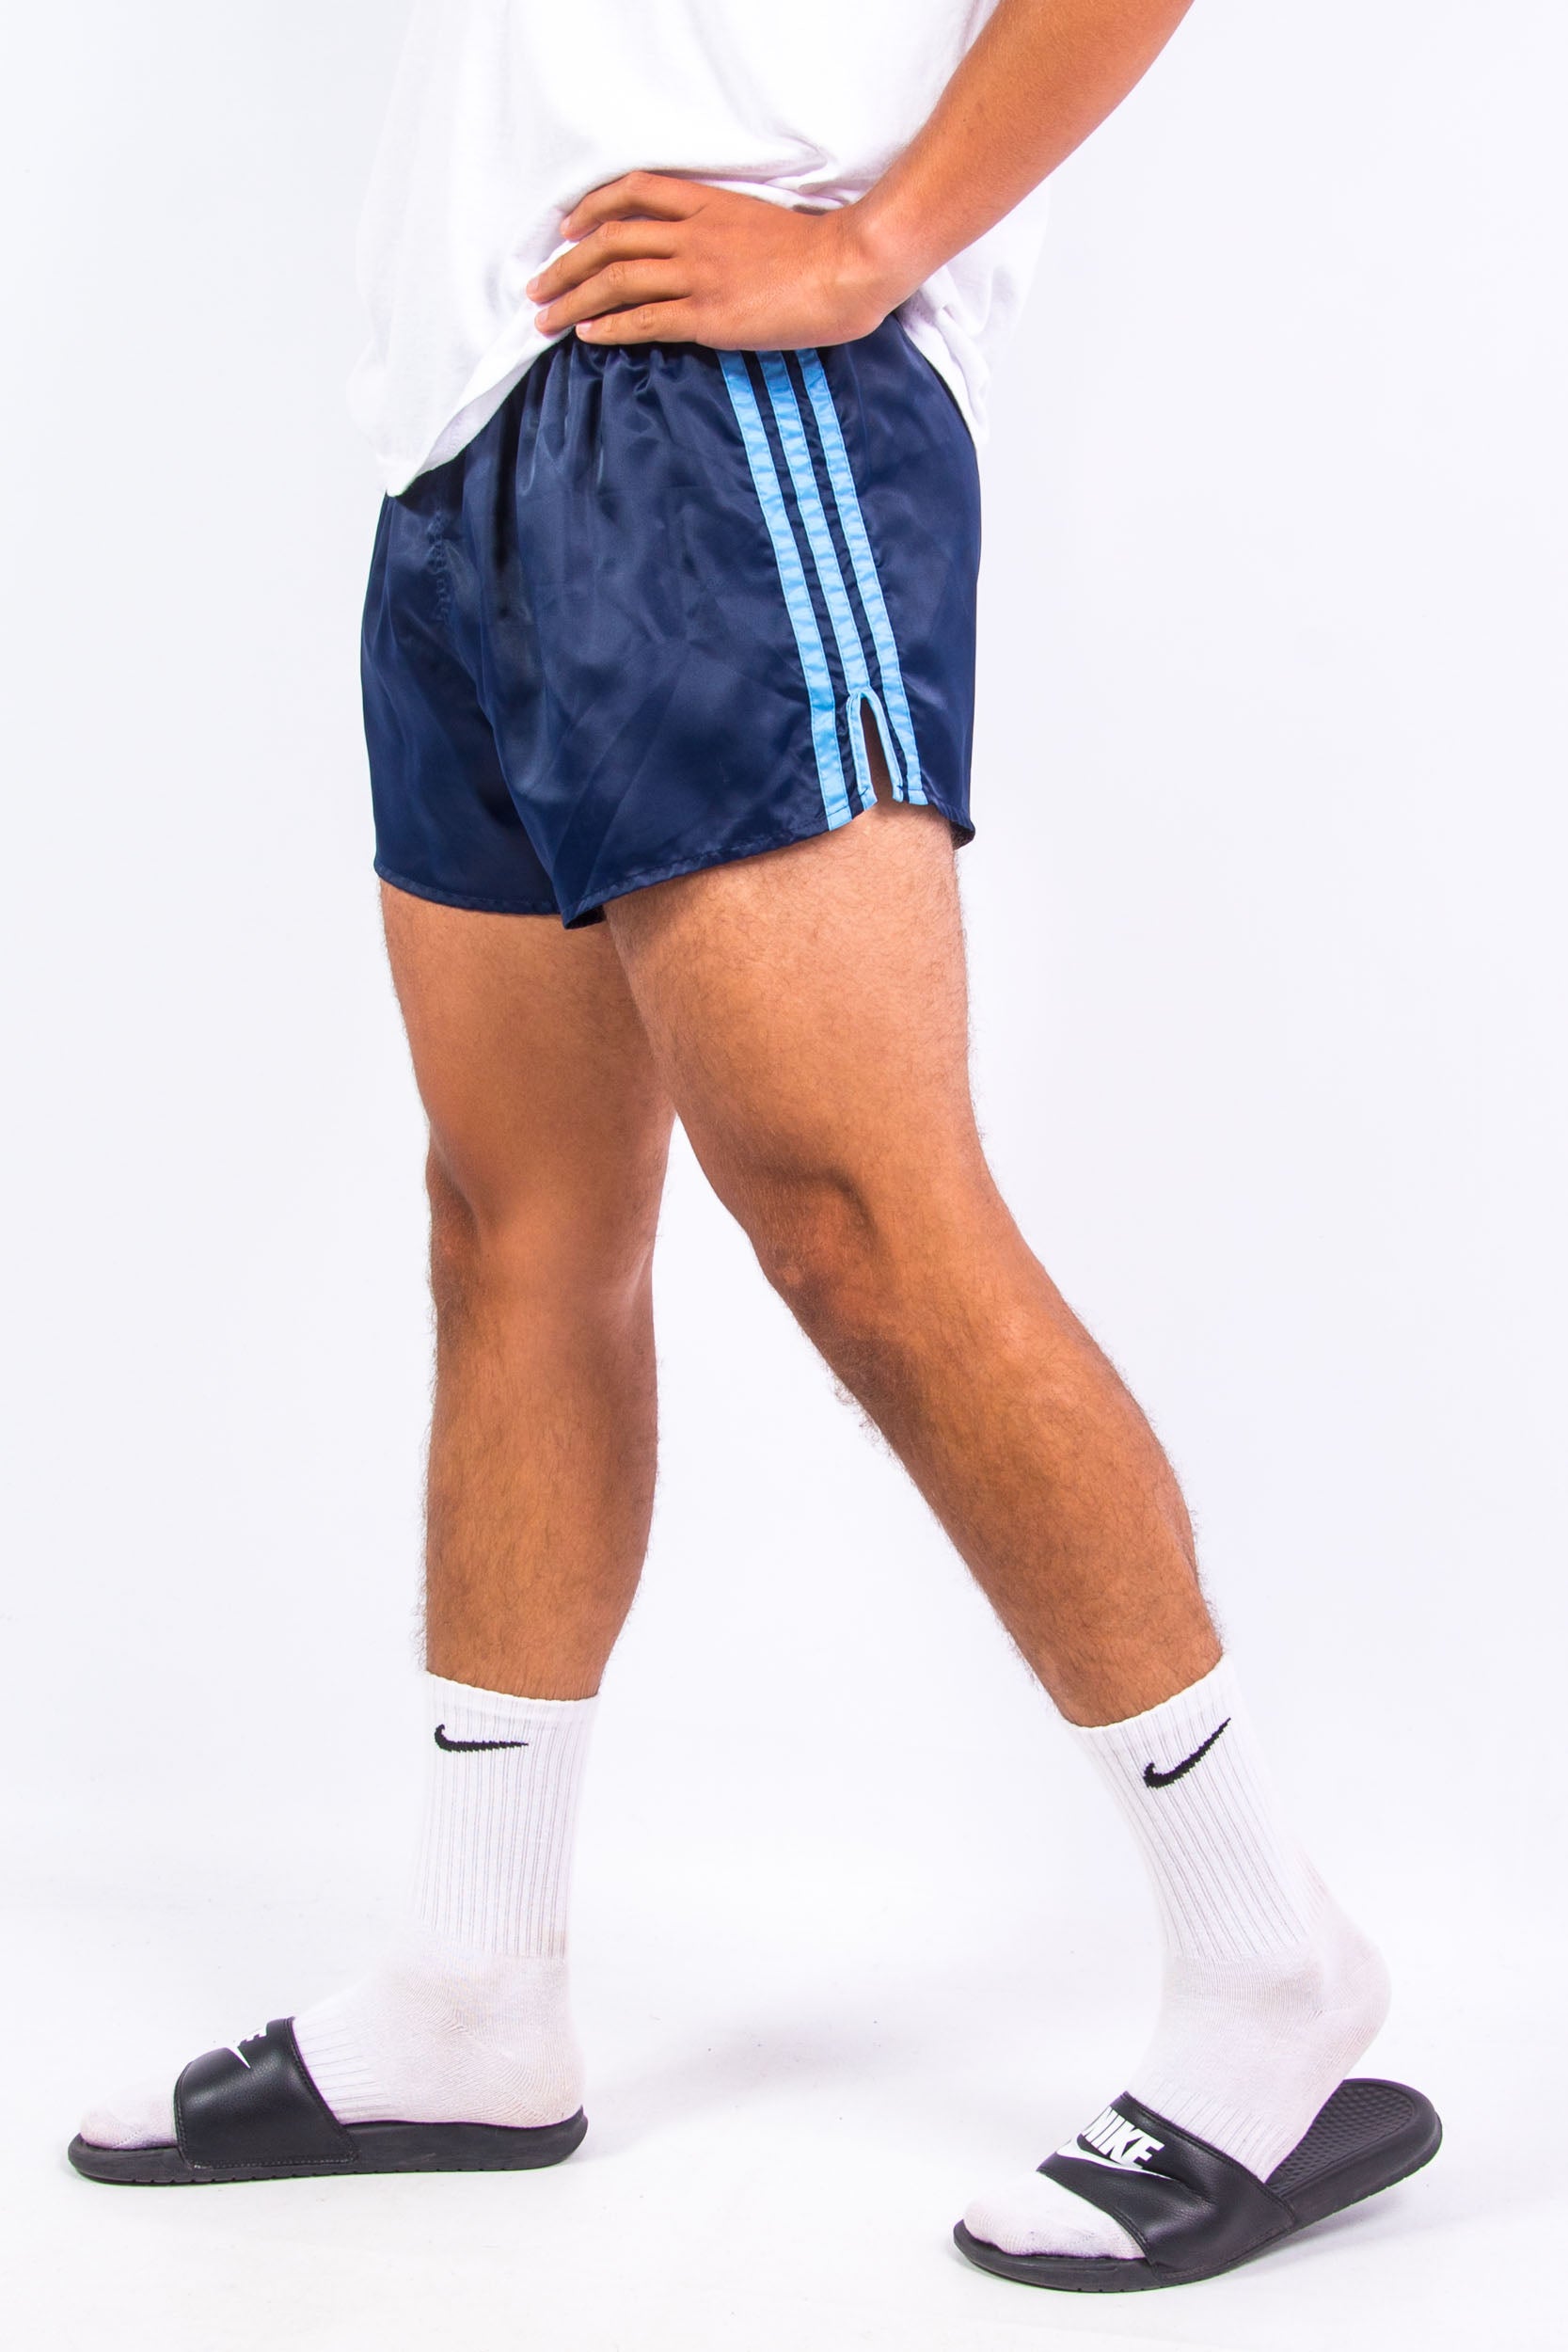 80's Adidas Short Shorts – The Scene